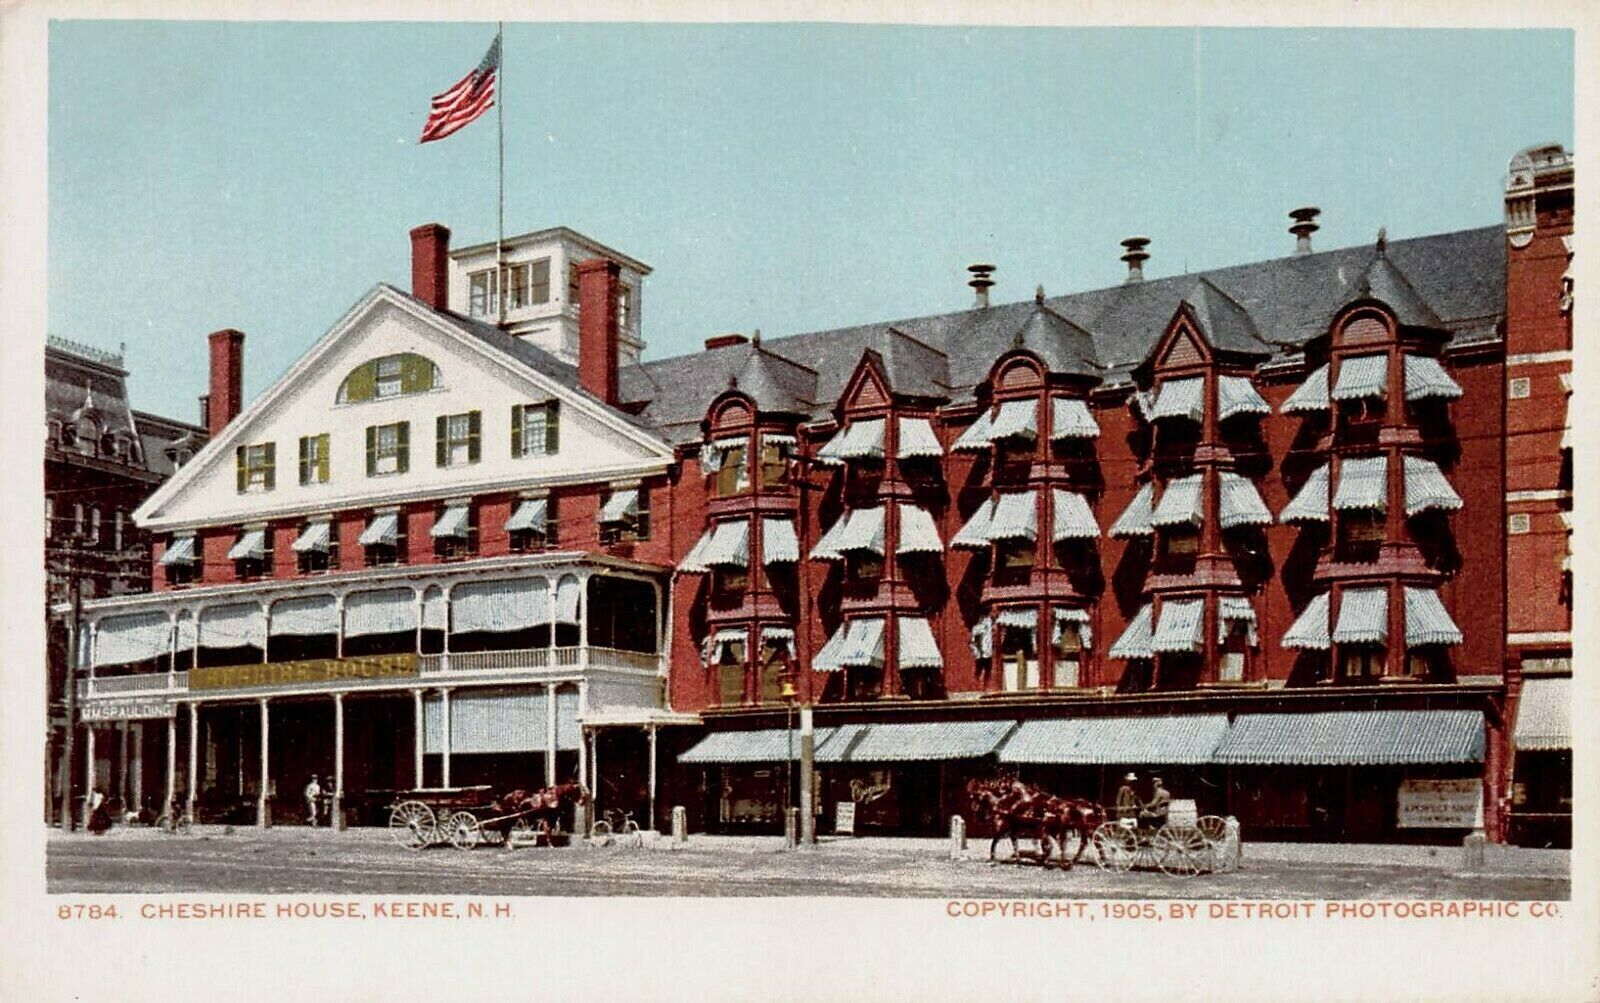 Cheshire House, Keene, N.H., 1905 Postcard, Detroit Photographic Co.